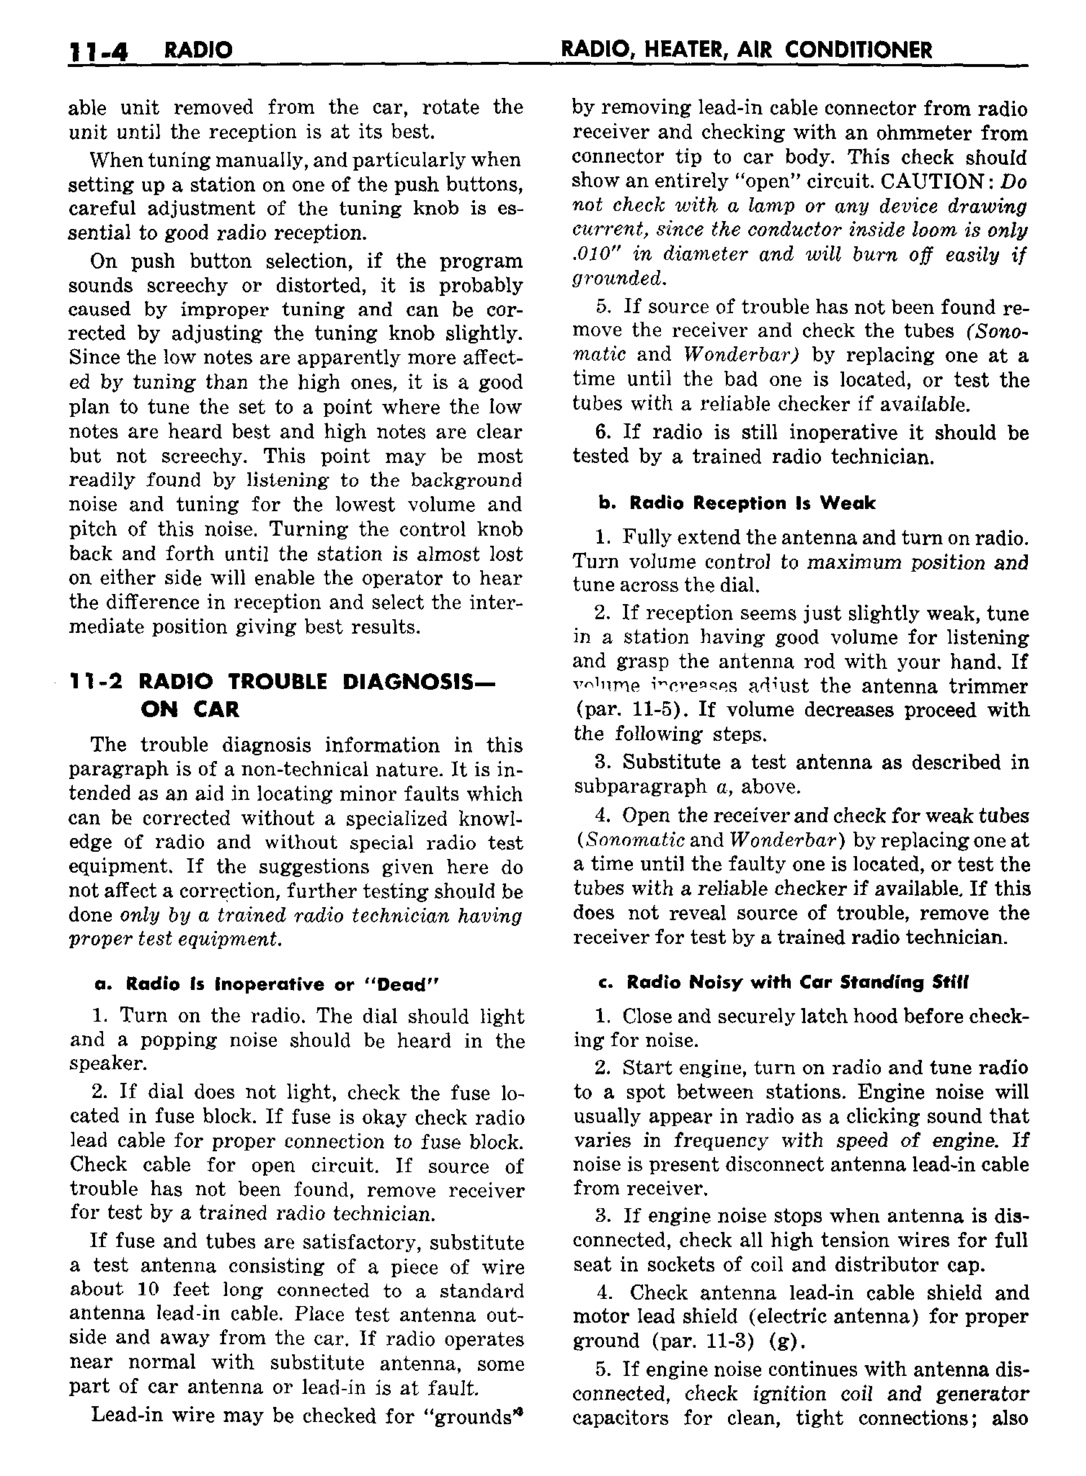 n_12 1959 Buick Shop Manual - Radio-Heater-AC-004-004.jpg